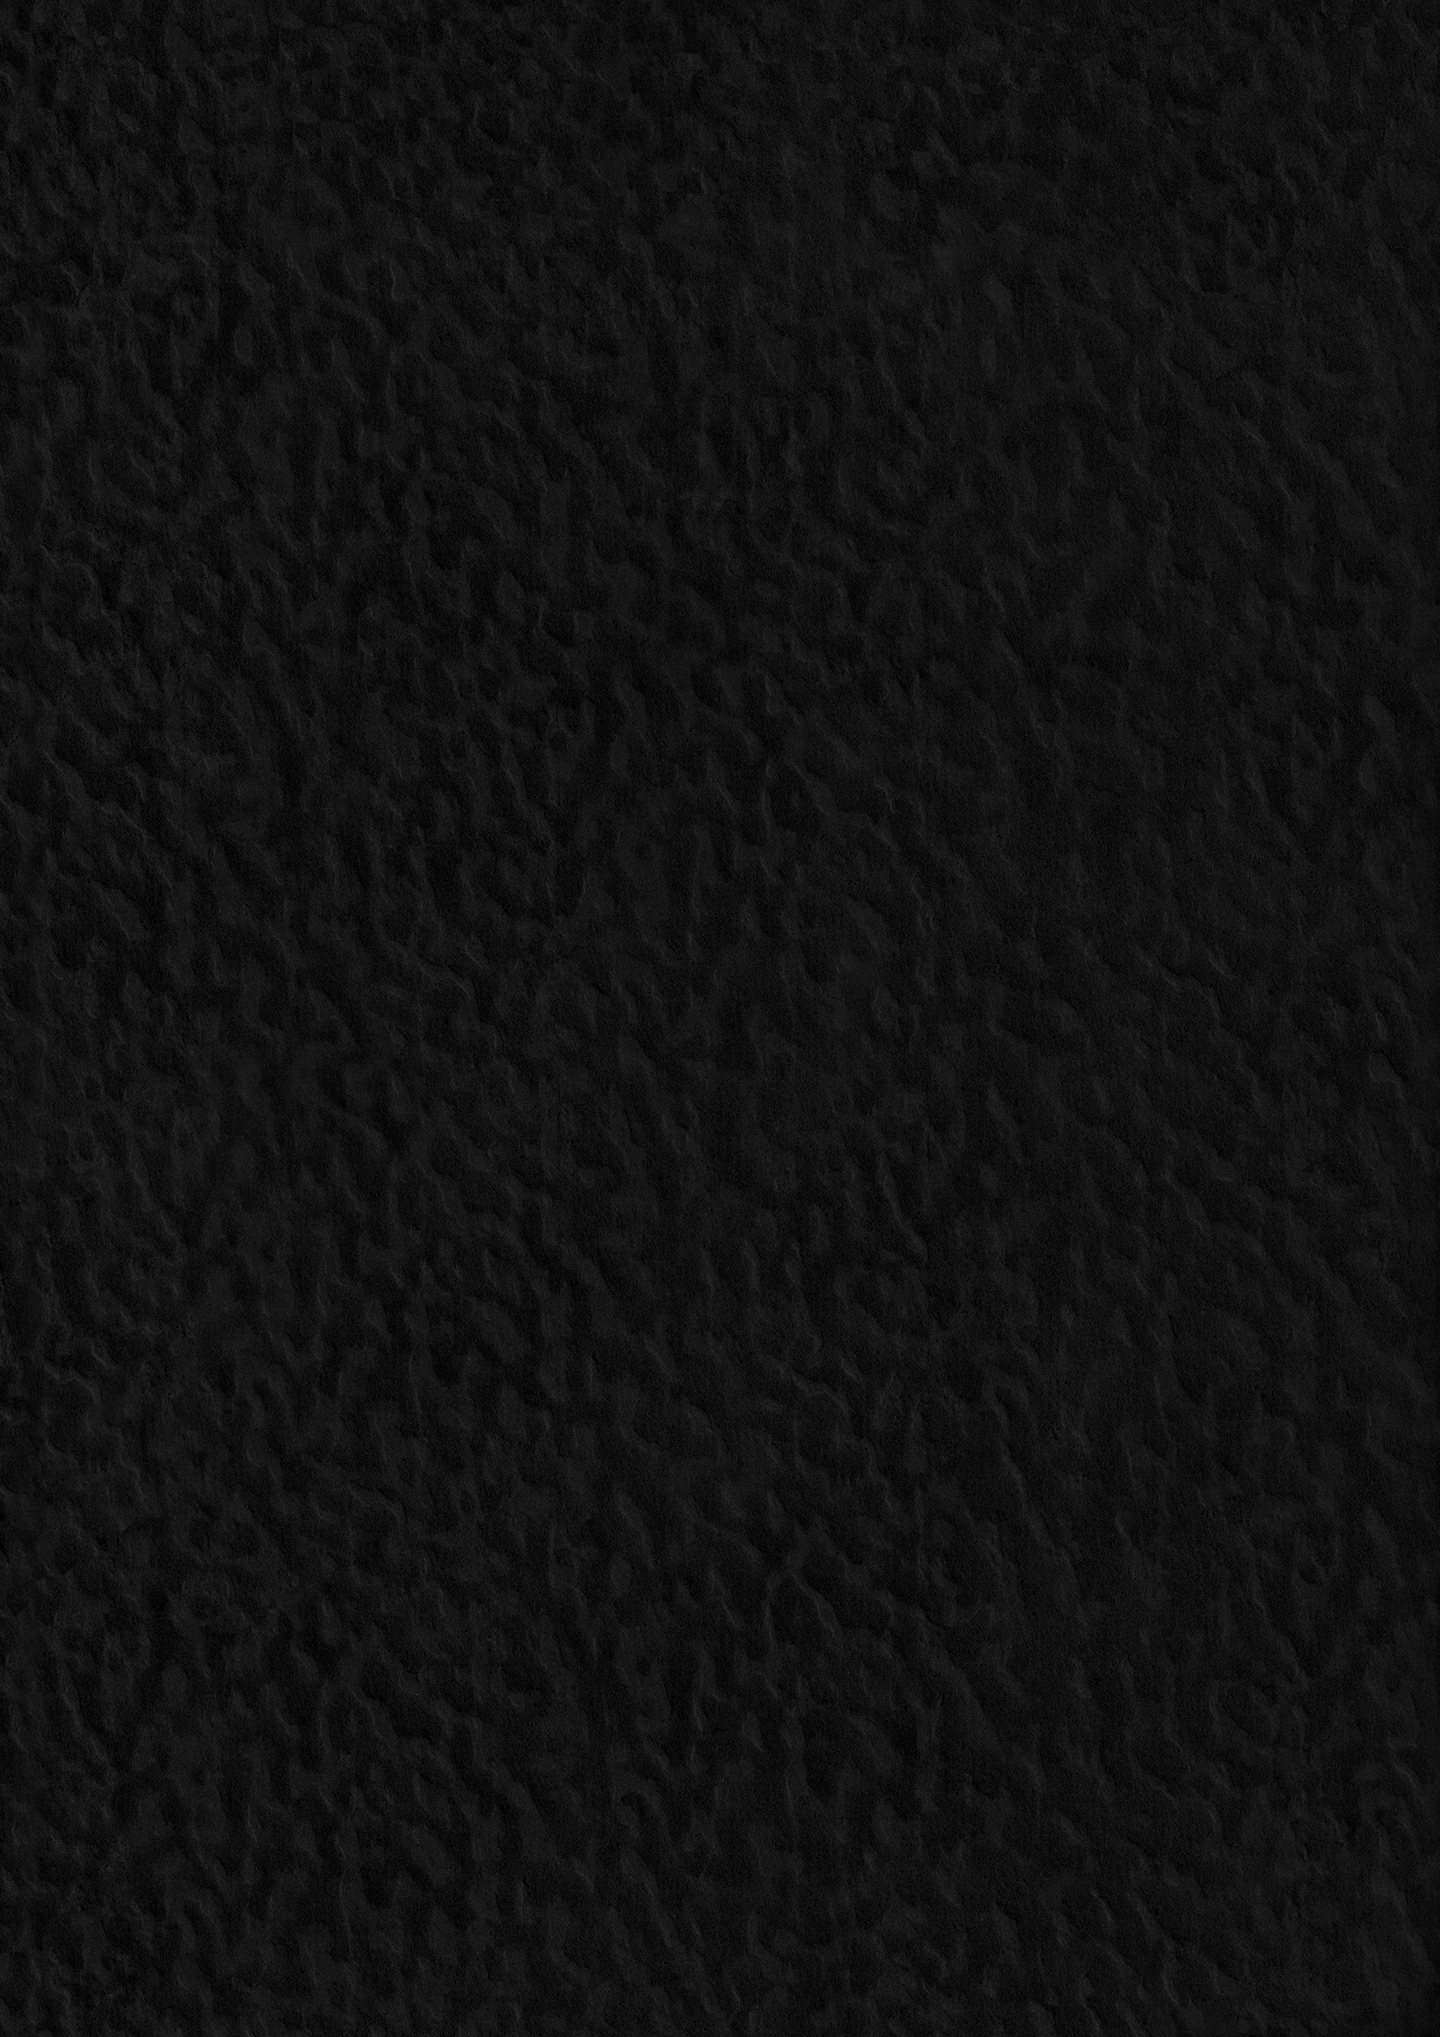 Black Paper Background Textures Textures.World